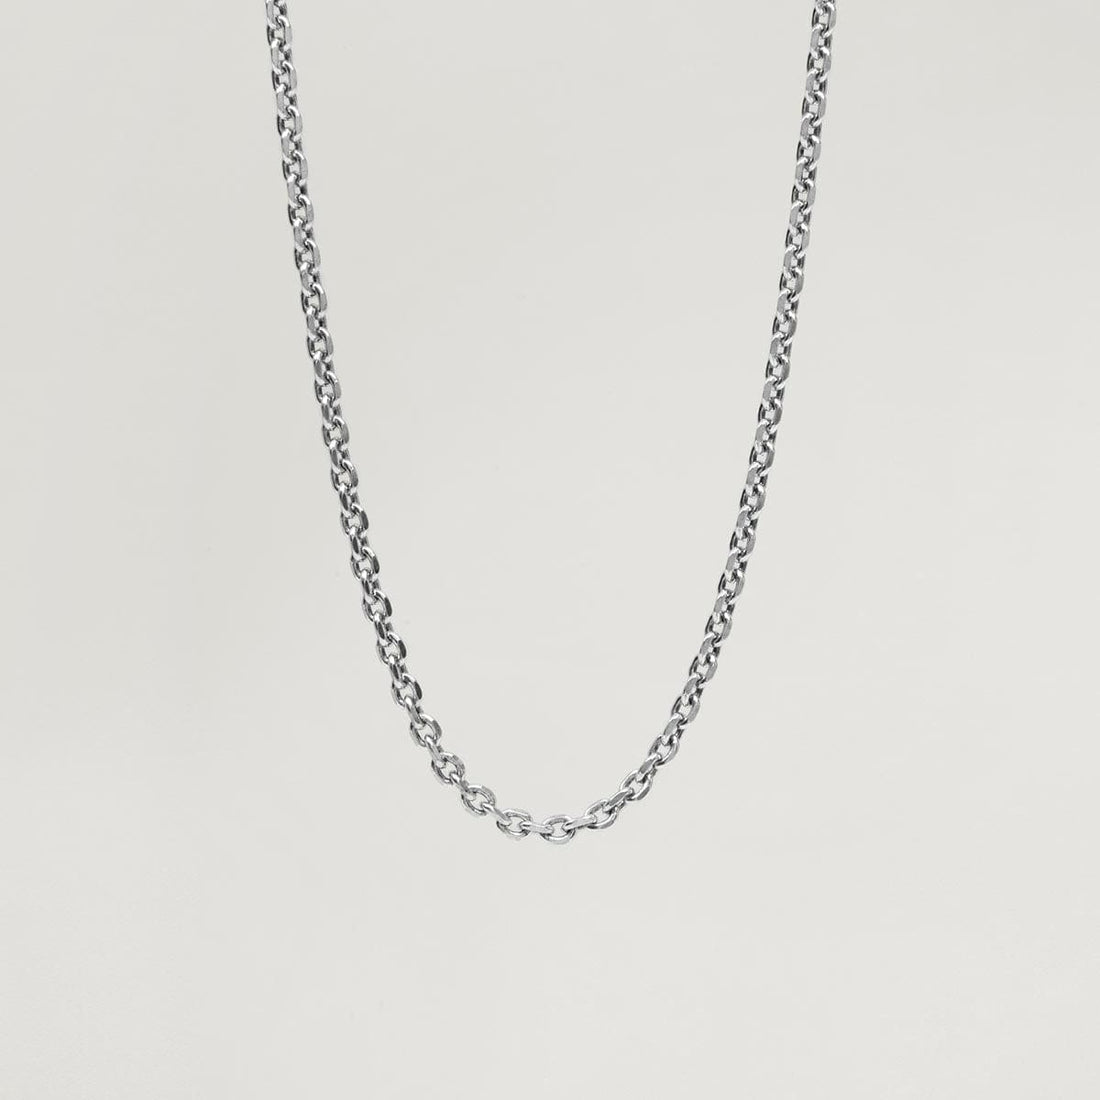 Kailua Chain Necklace Silver